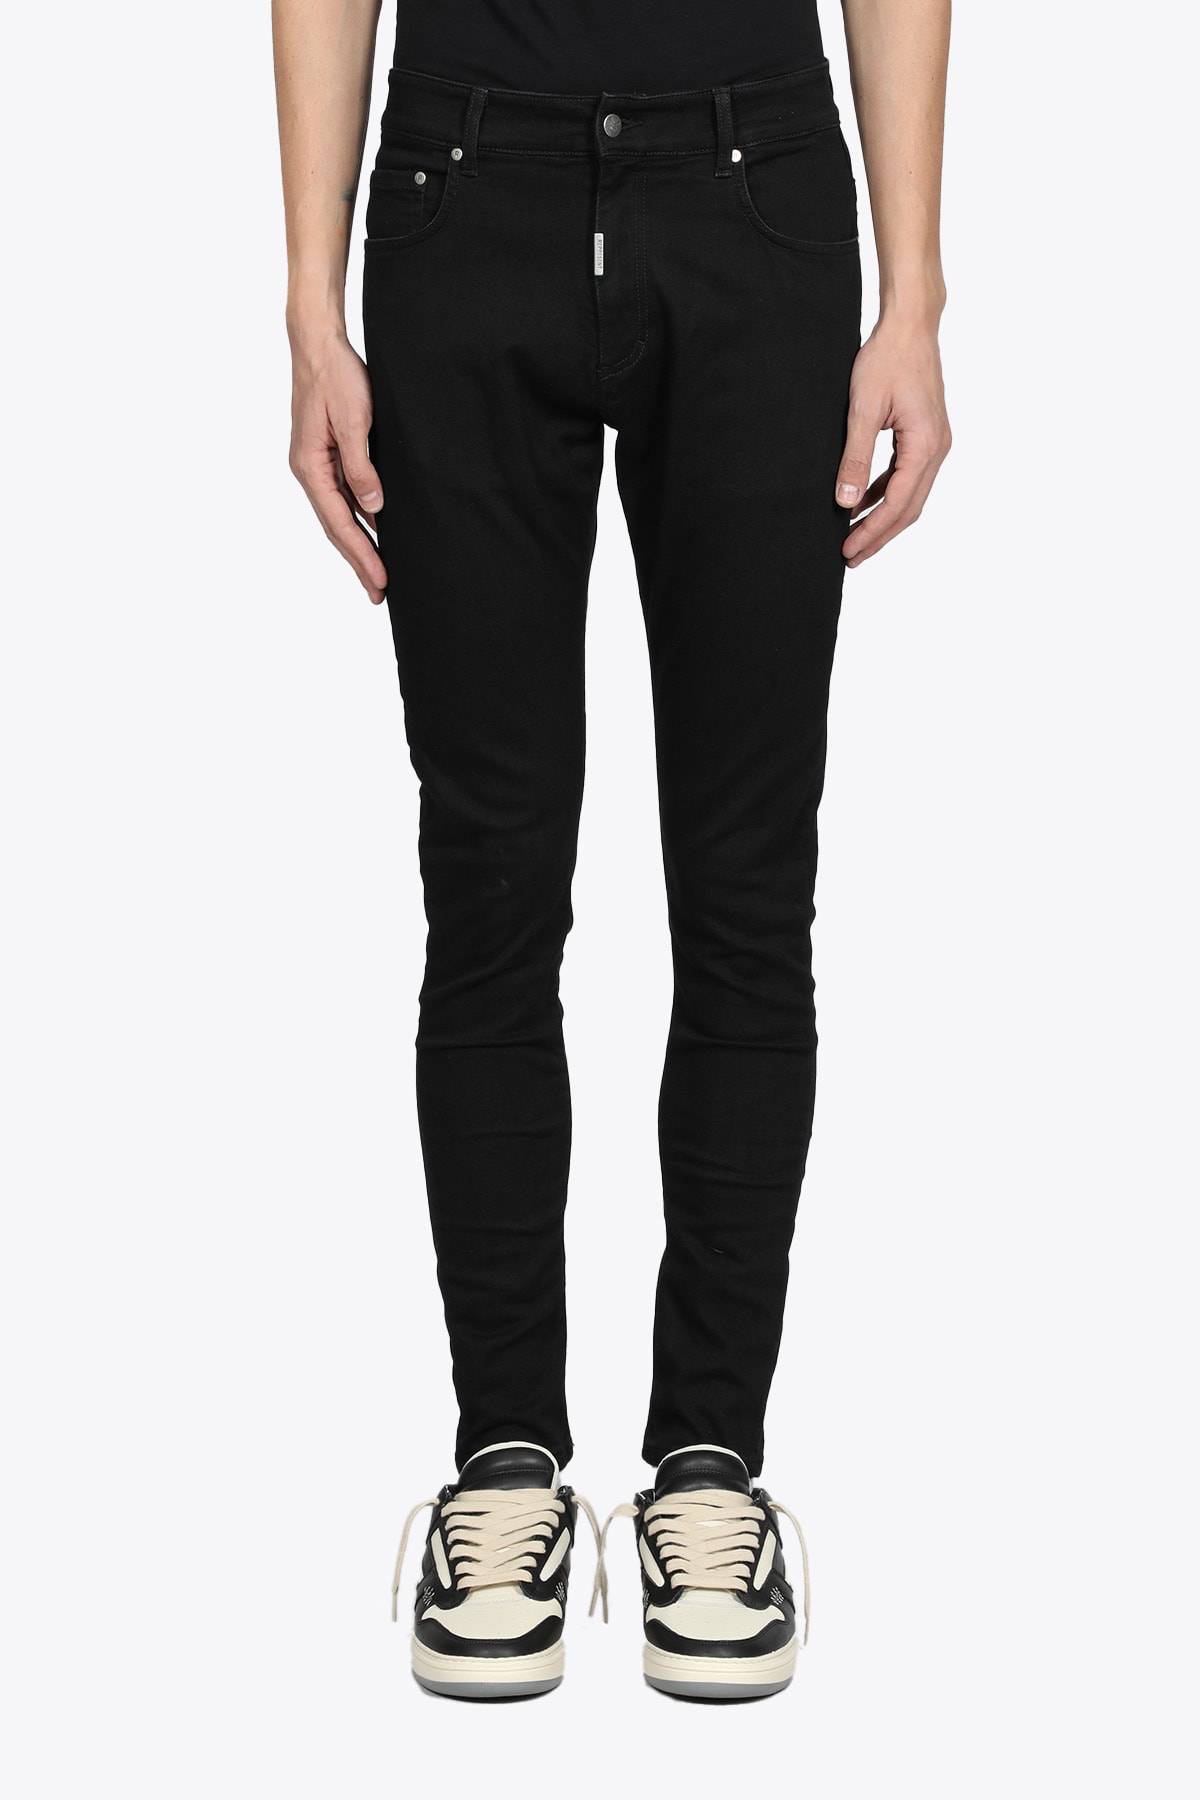 REPRESENT Essential Denim Black skinny jeans - Essential Denim